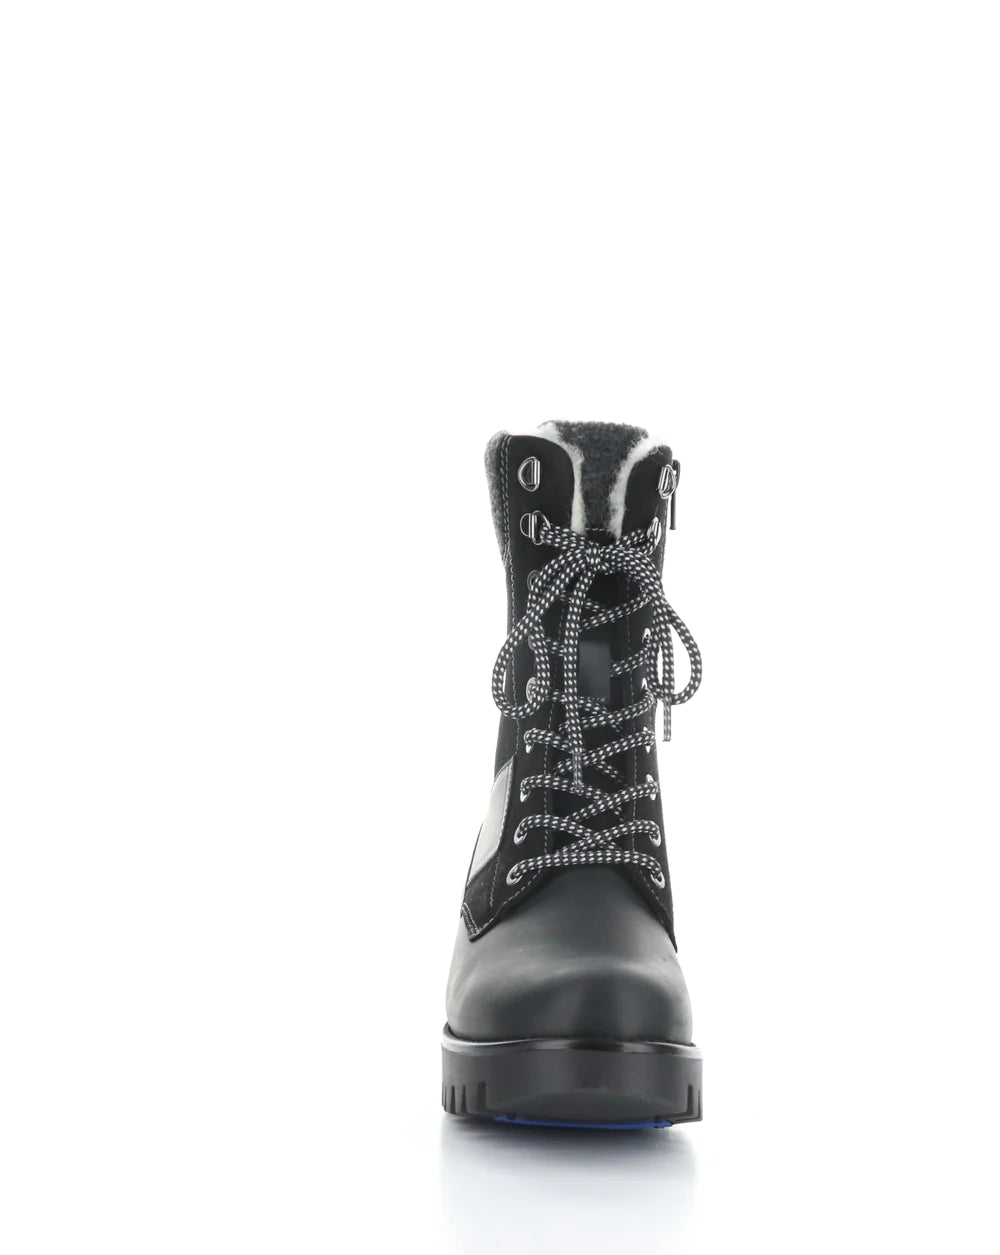 Bos & Co Genus Prima Round Toe Boots - Black